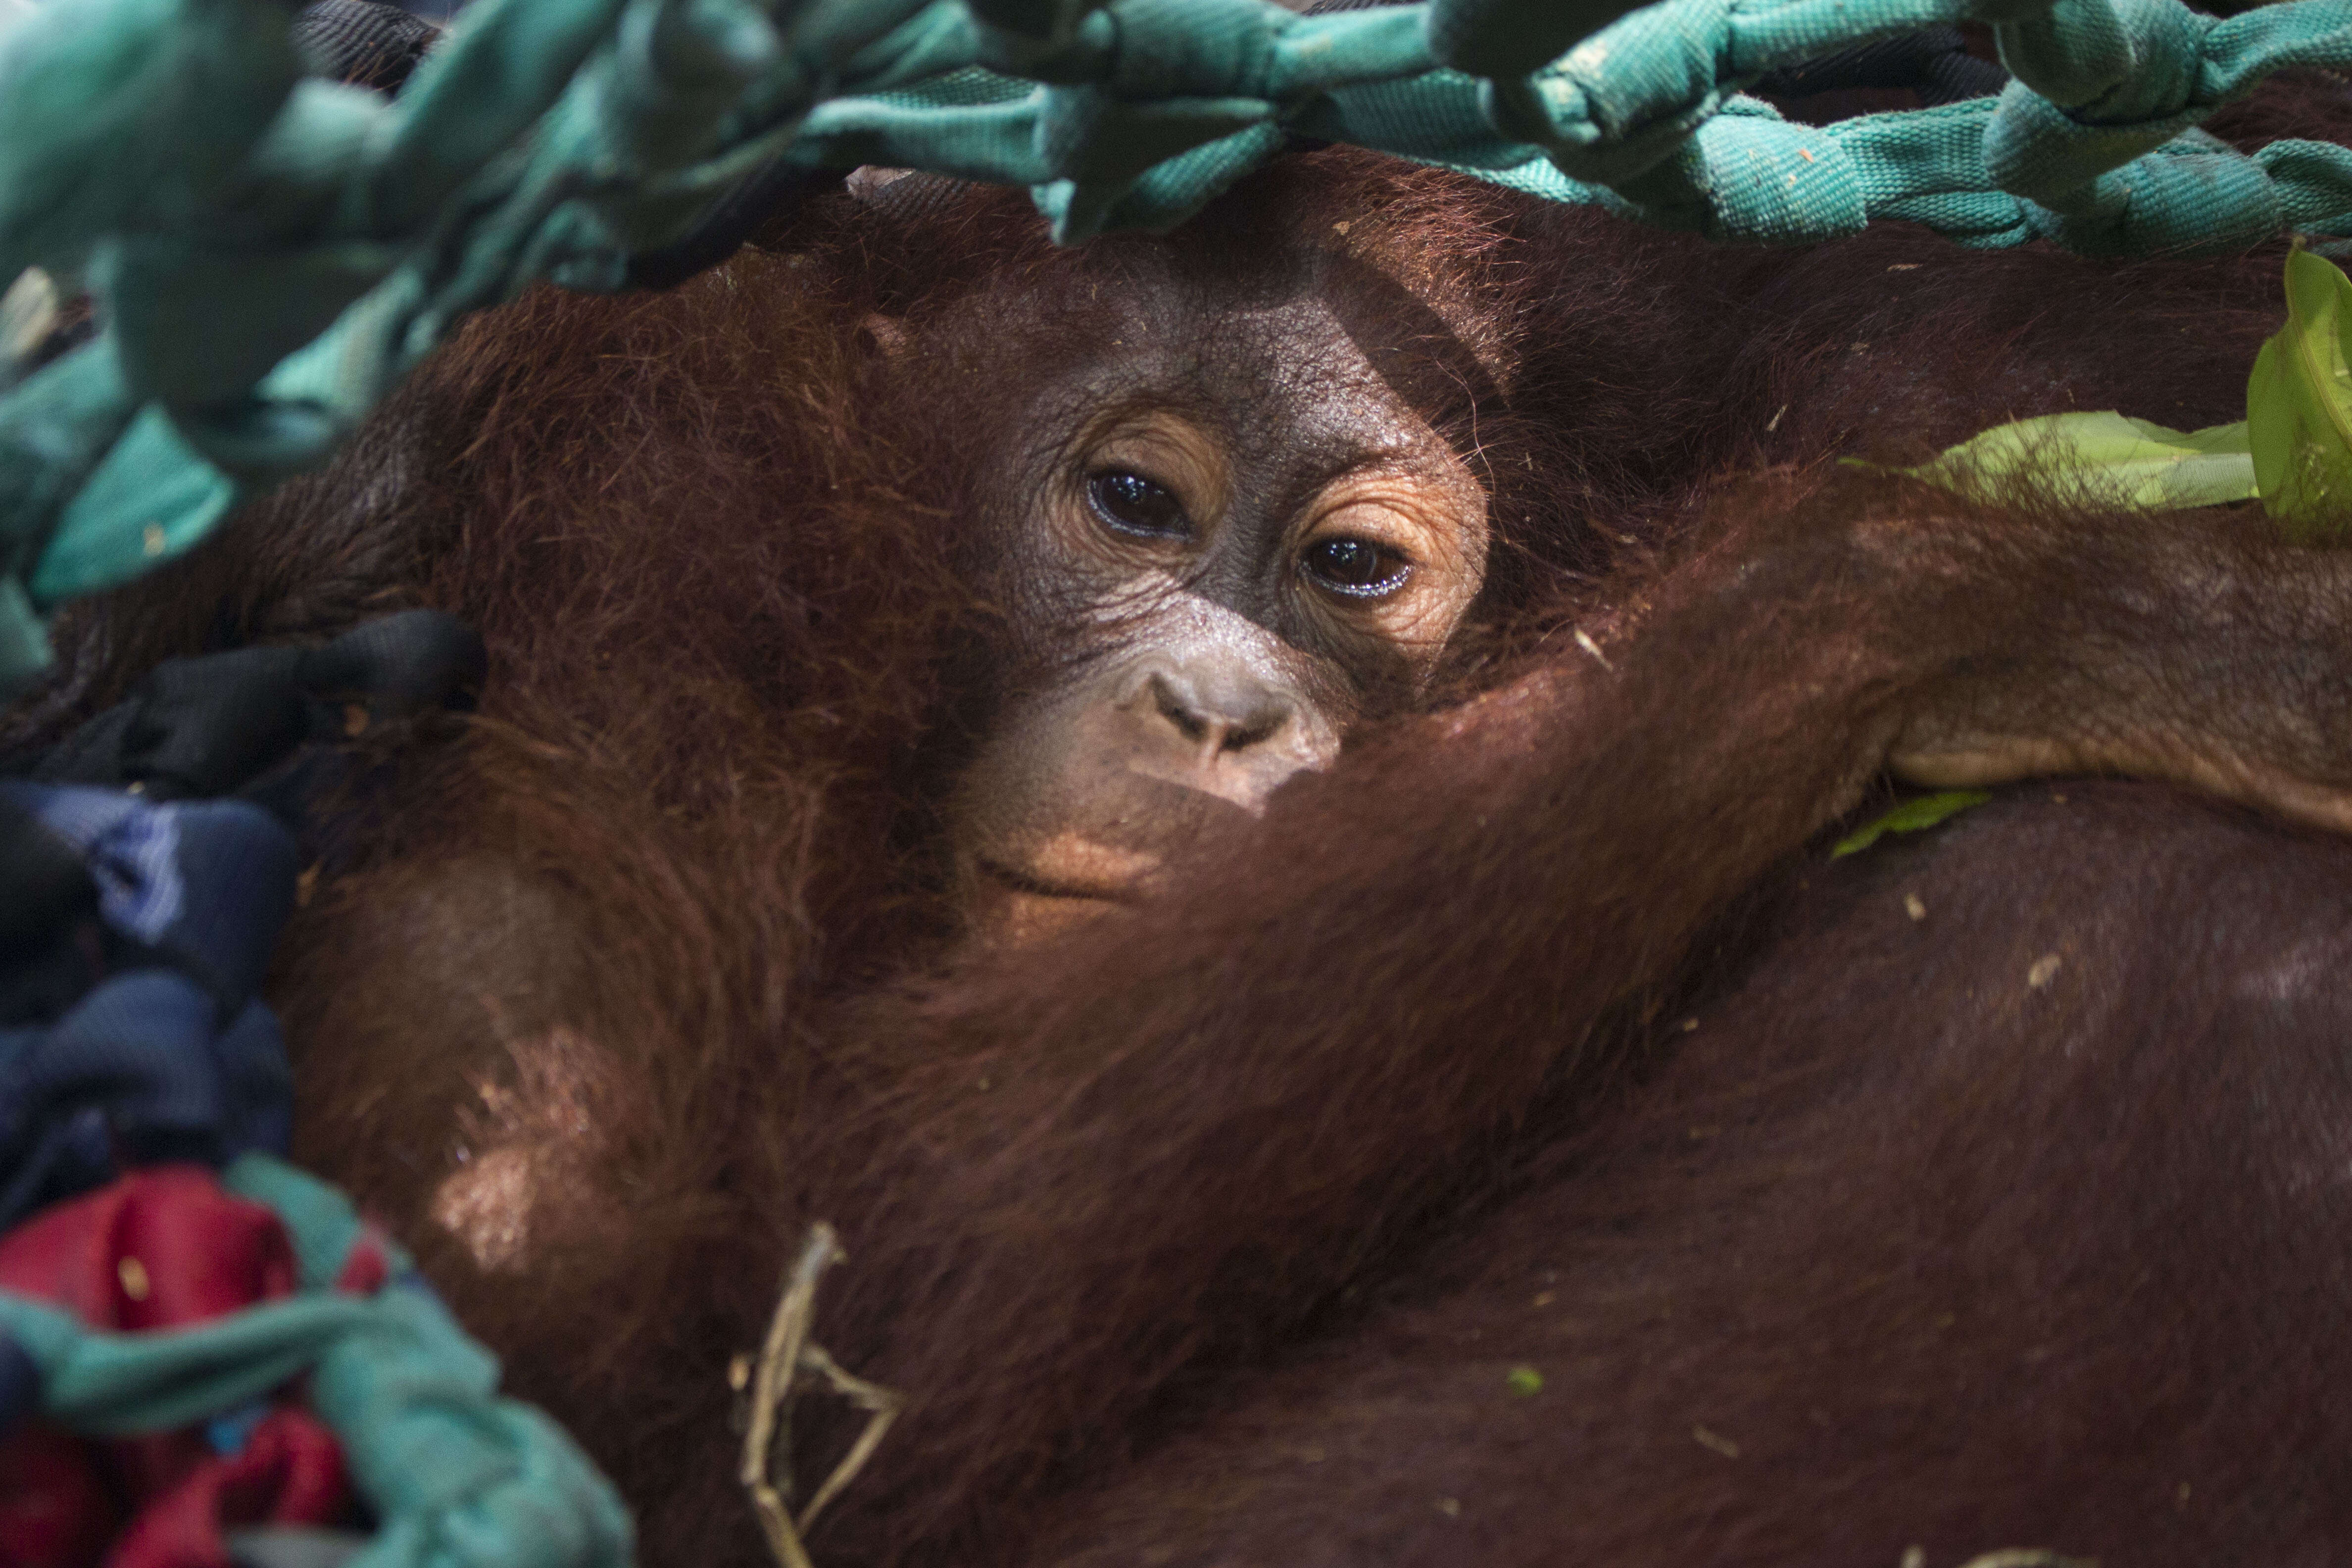 Baby orangutan clinging to her mom